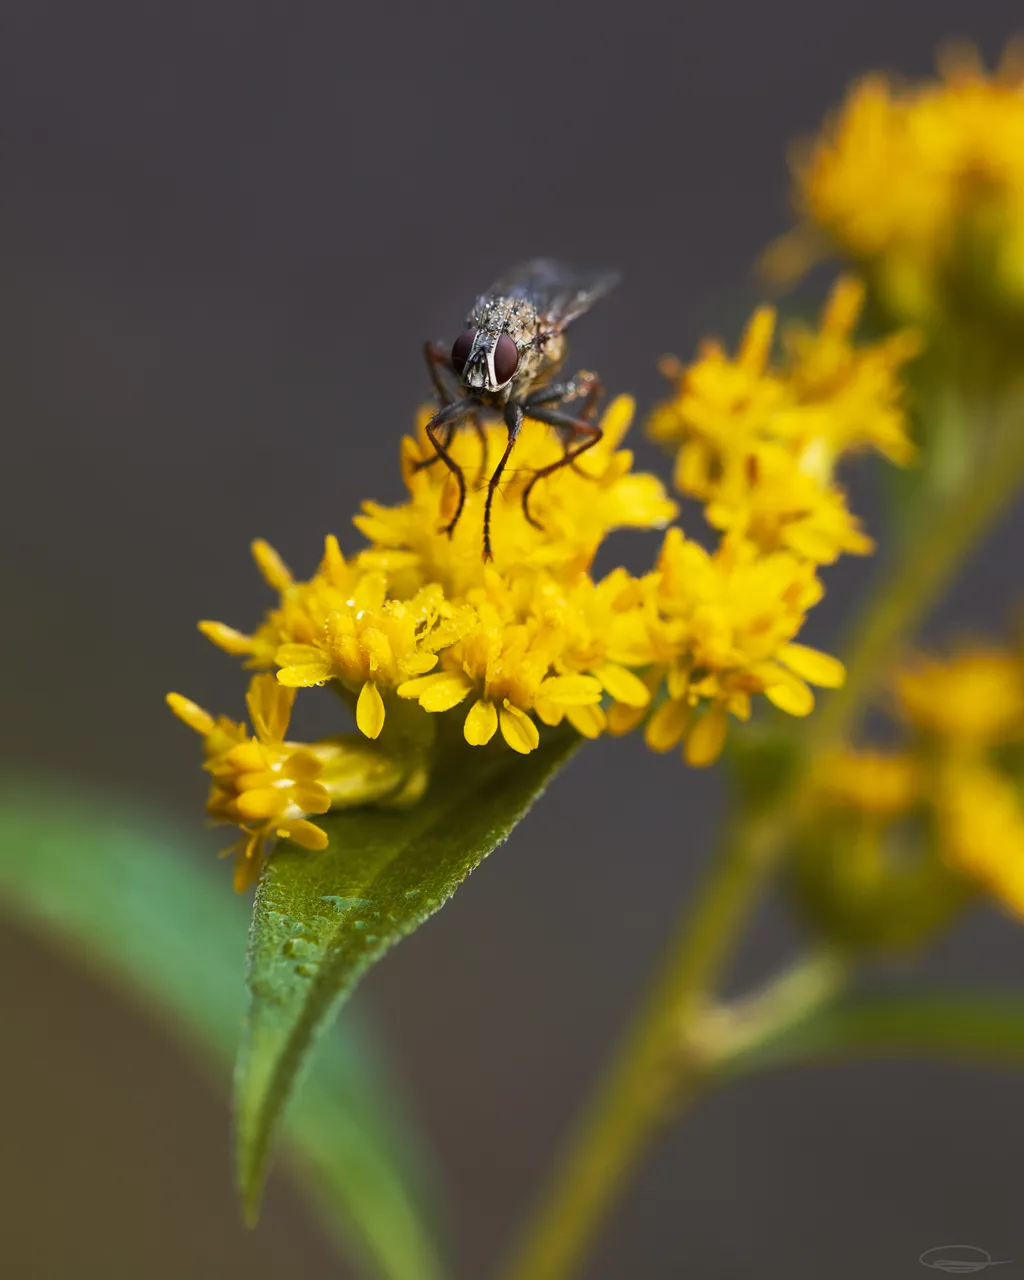 Little World - Hive | PhotoFeed Theme Contest - Macro Photography